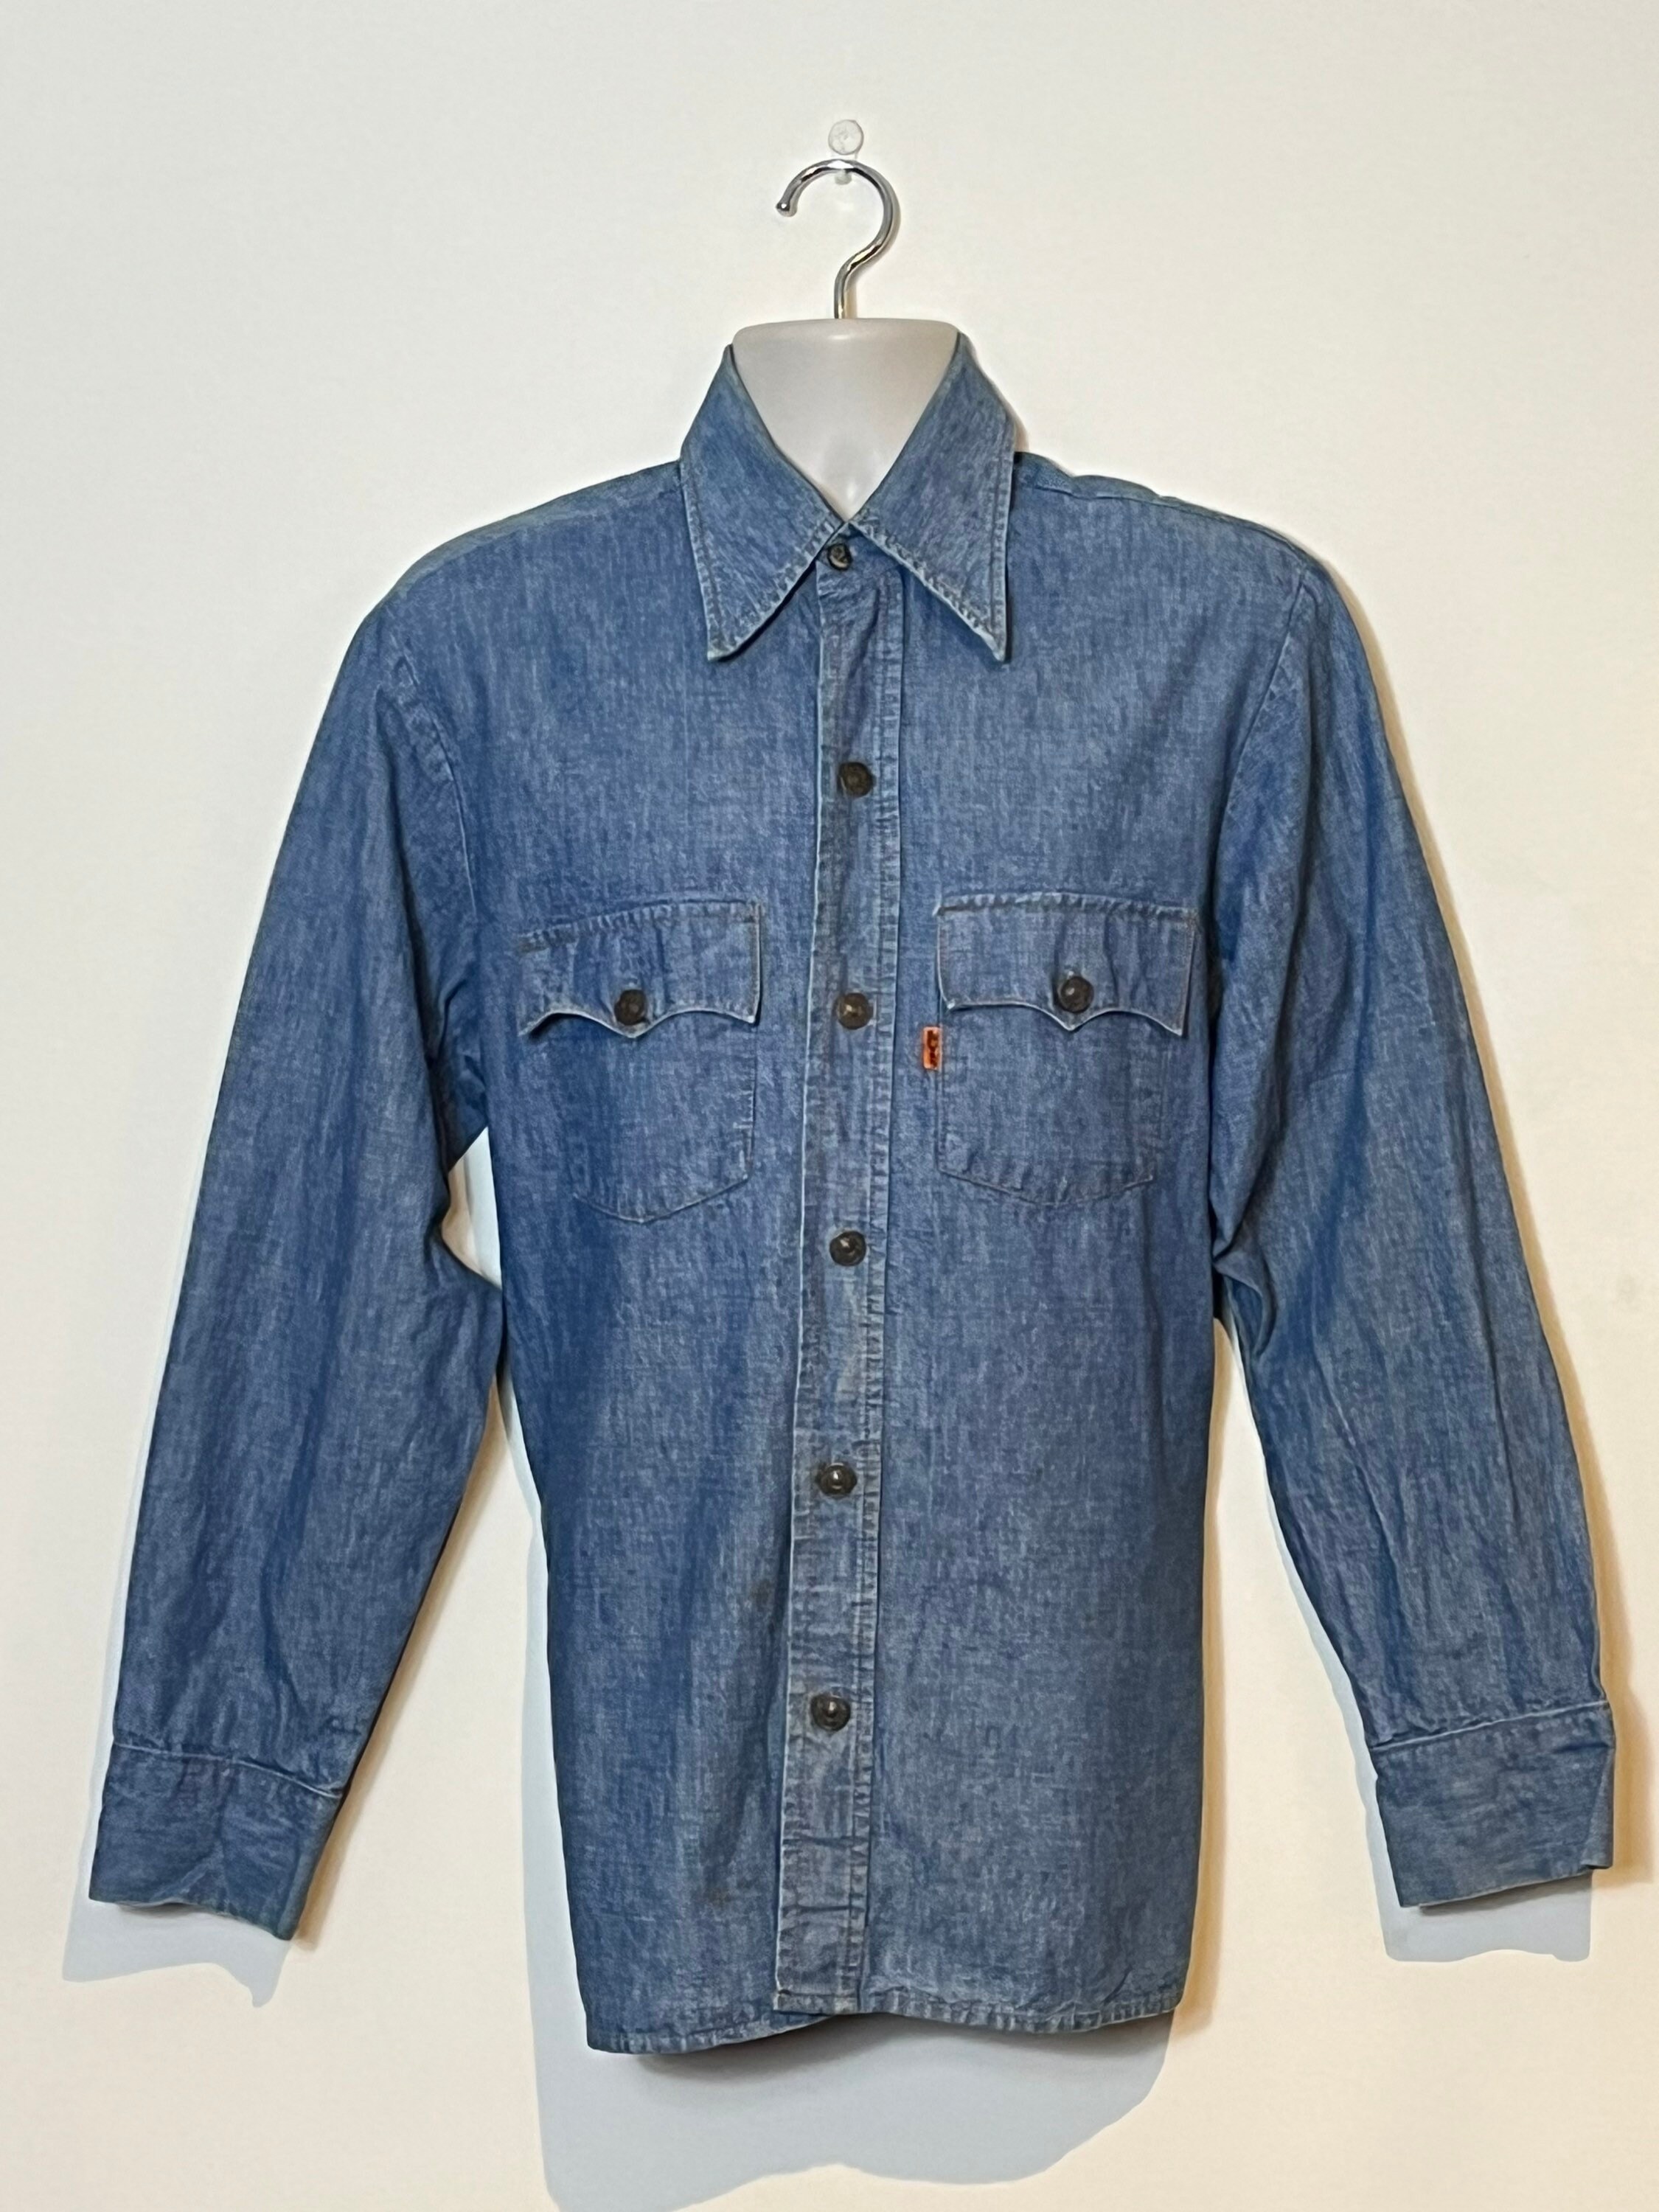 Vintage Levis 501 Graphic Shirt Button Your Fly Levi’s Vtg Tee Single Stitch